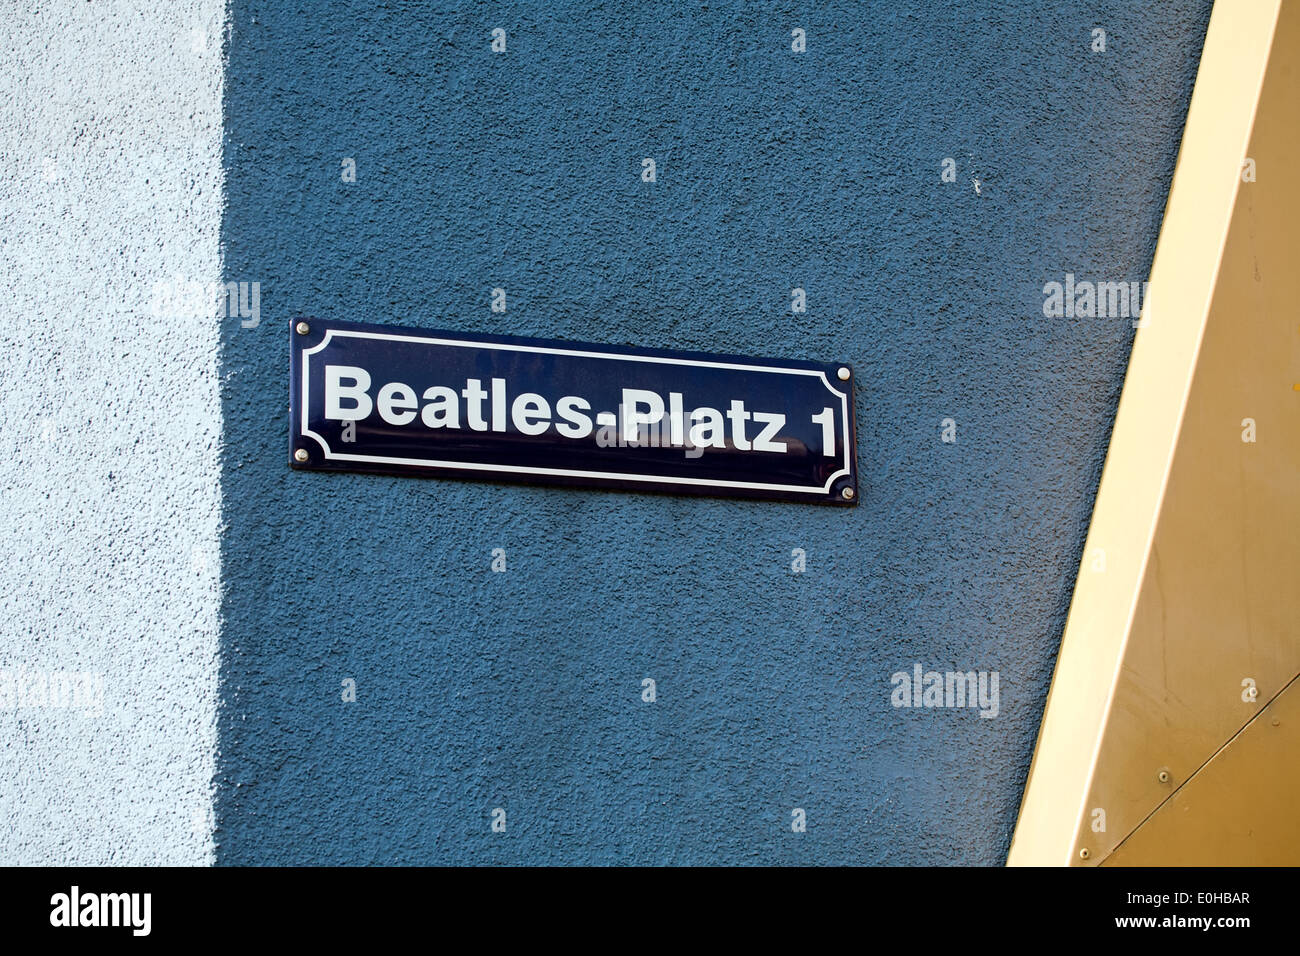 Beatles square title on the wall, Reeperbahn street, Hamburg, Germany Stock Photo